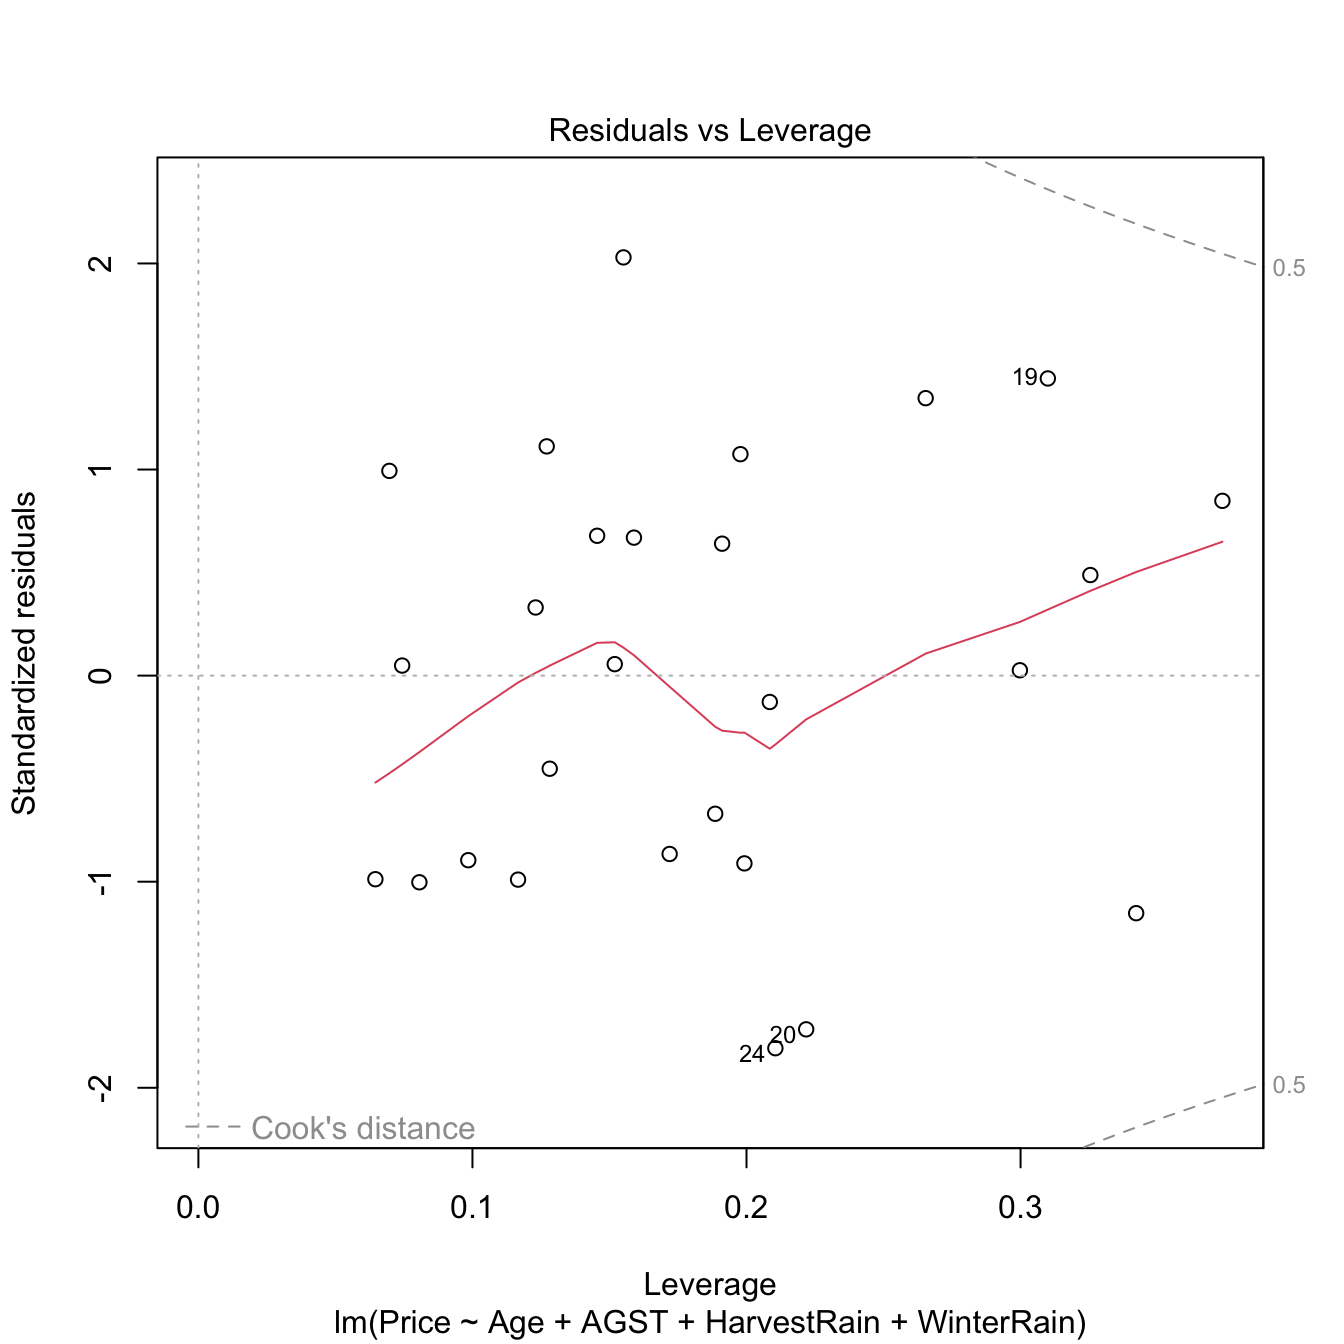 Residuals vs. leverage plot for the Price ~ Age + AGST + HarvestRain + WinterRain model for the wine dataset.